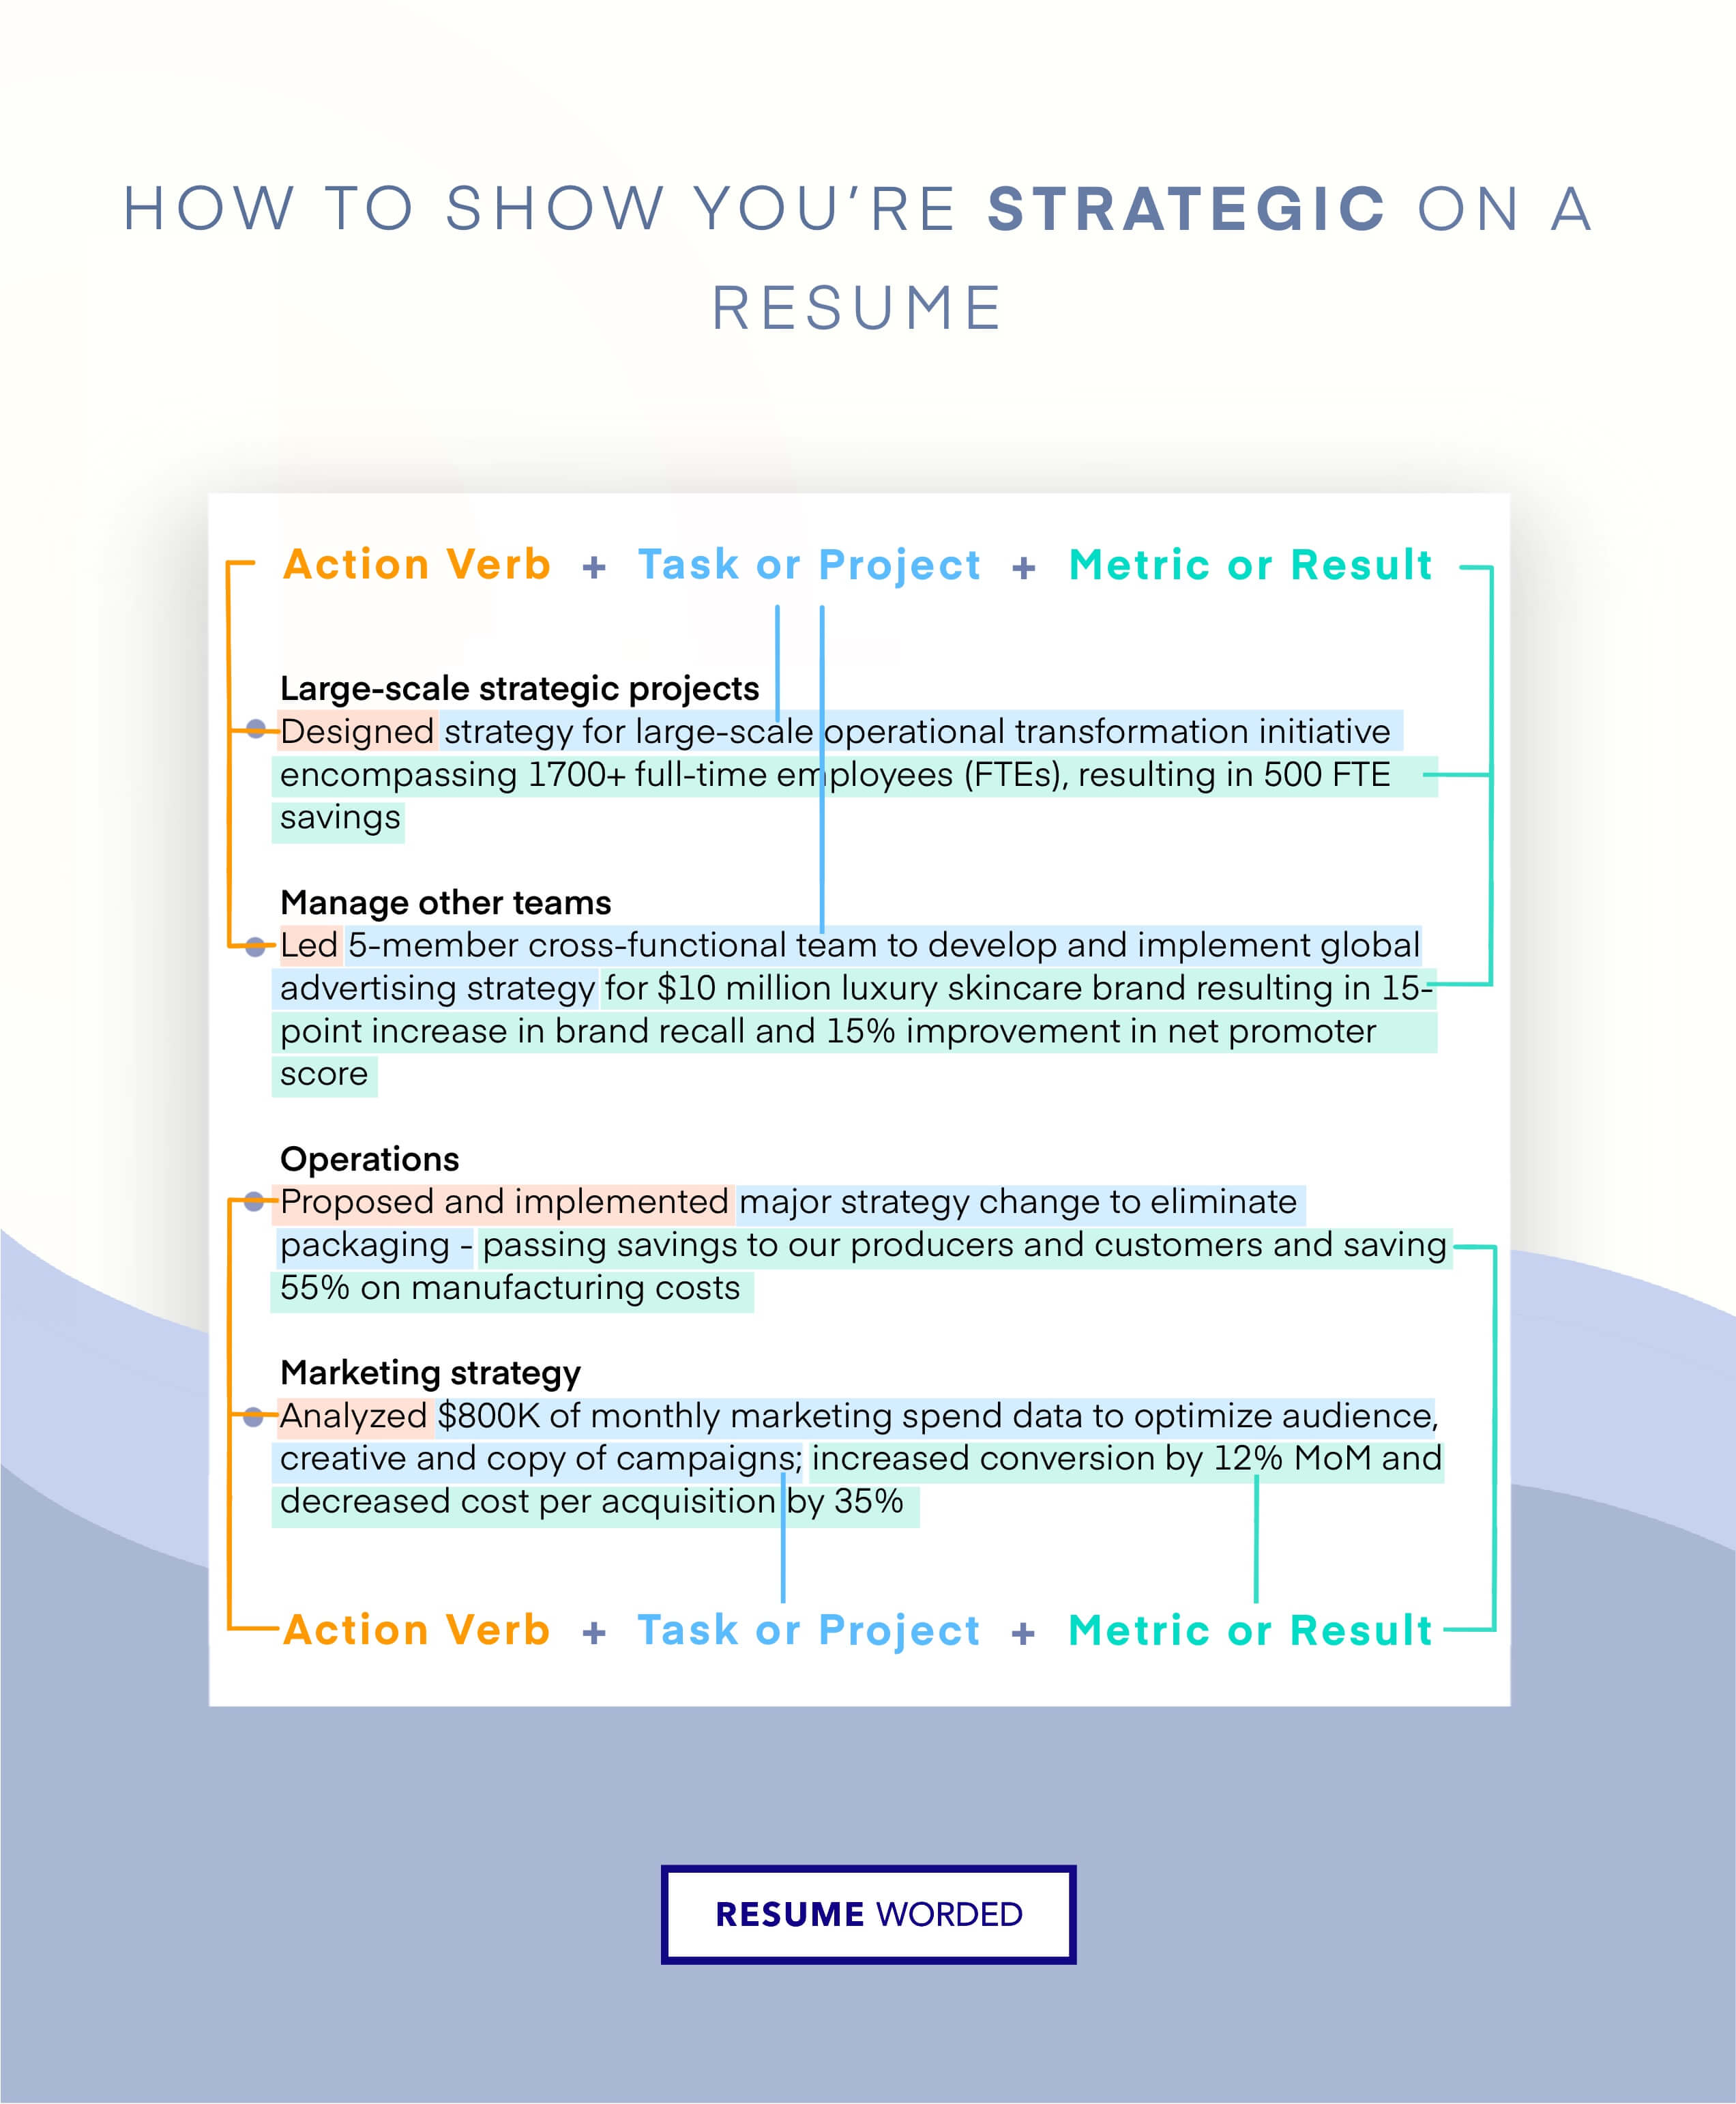 Showcase your strategic capabilities - Digital Marketing Director CV